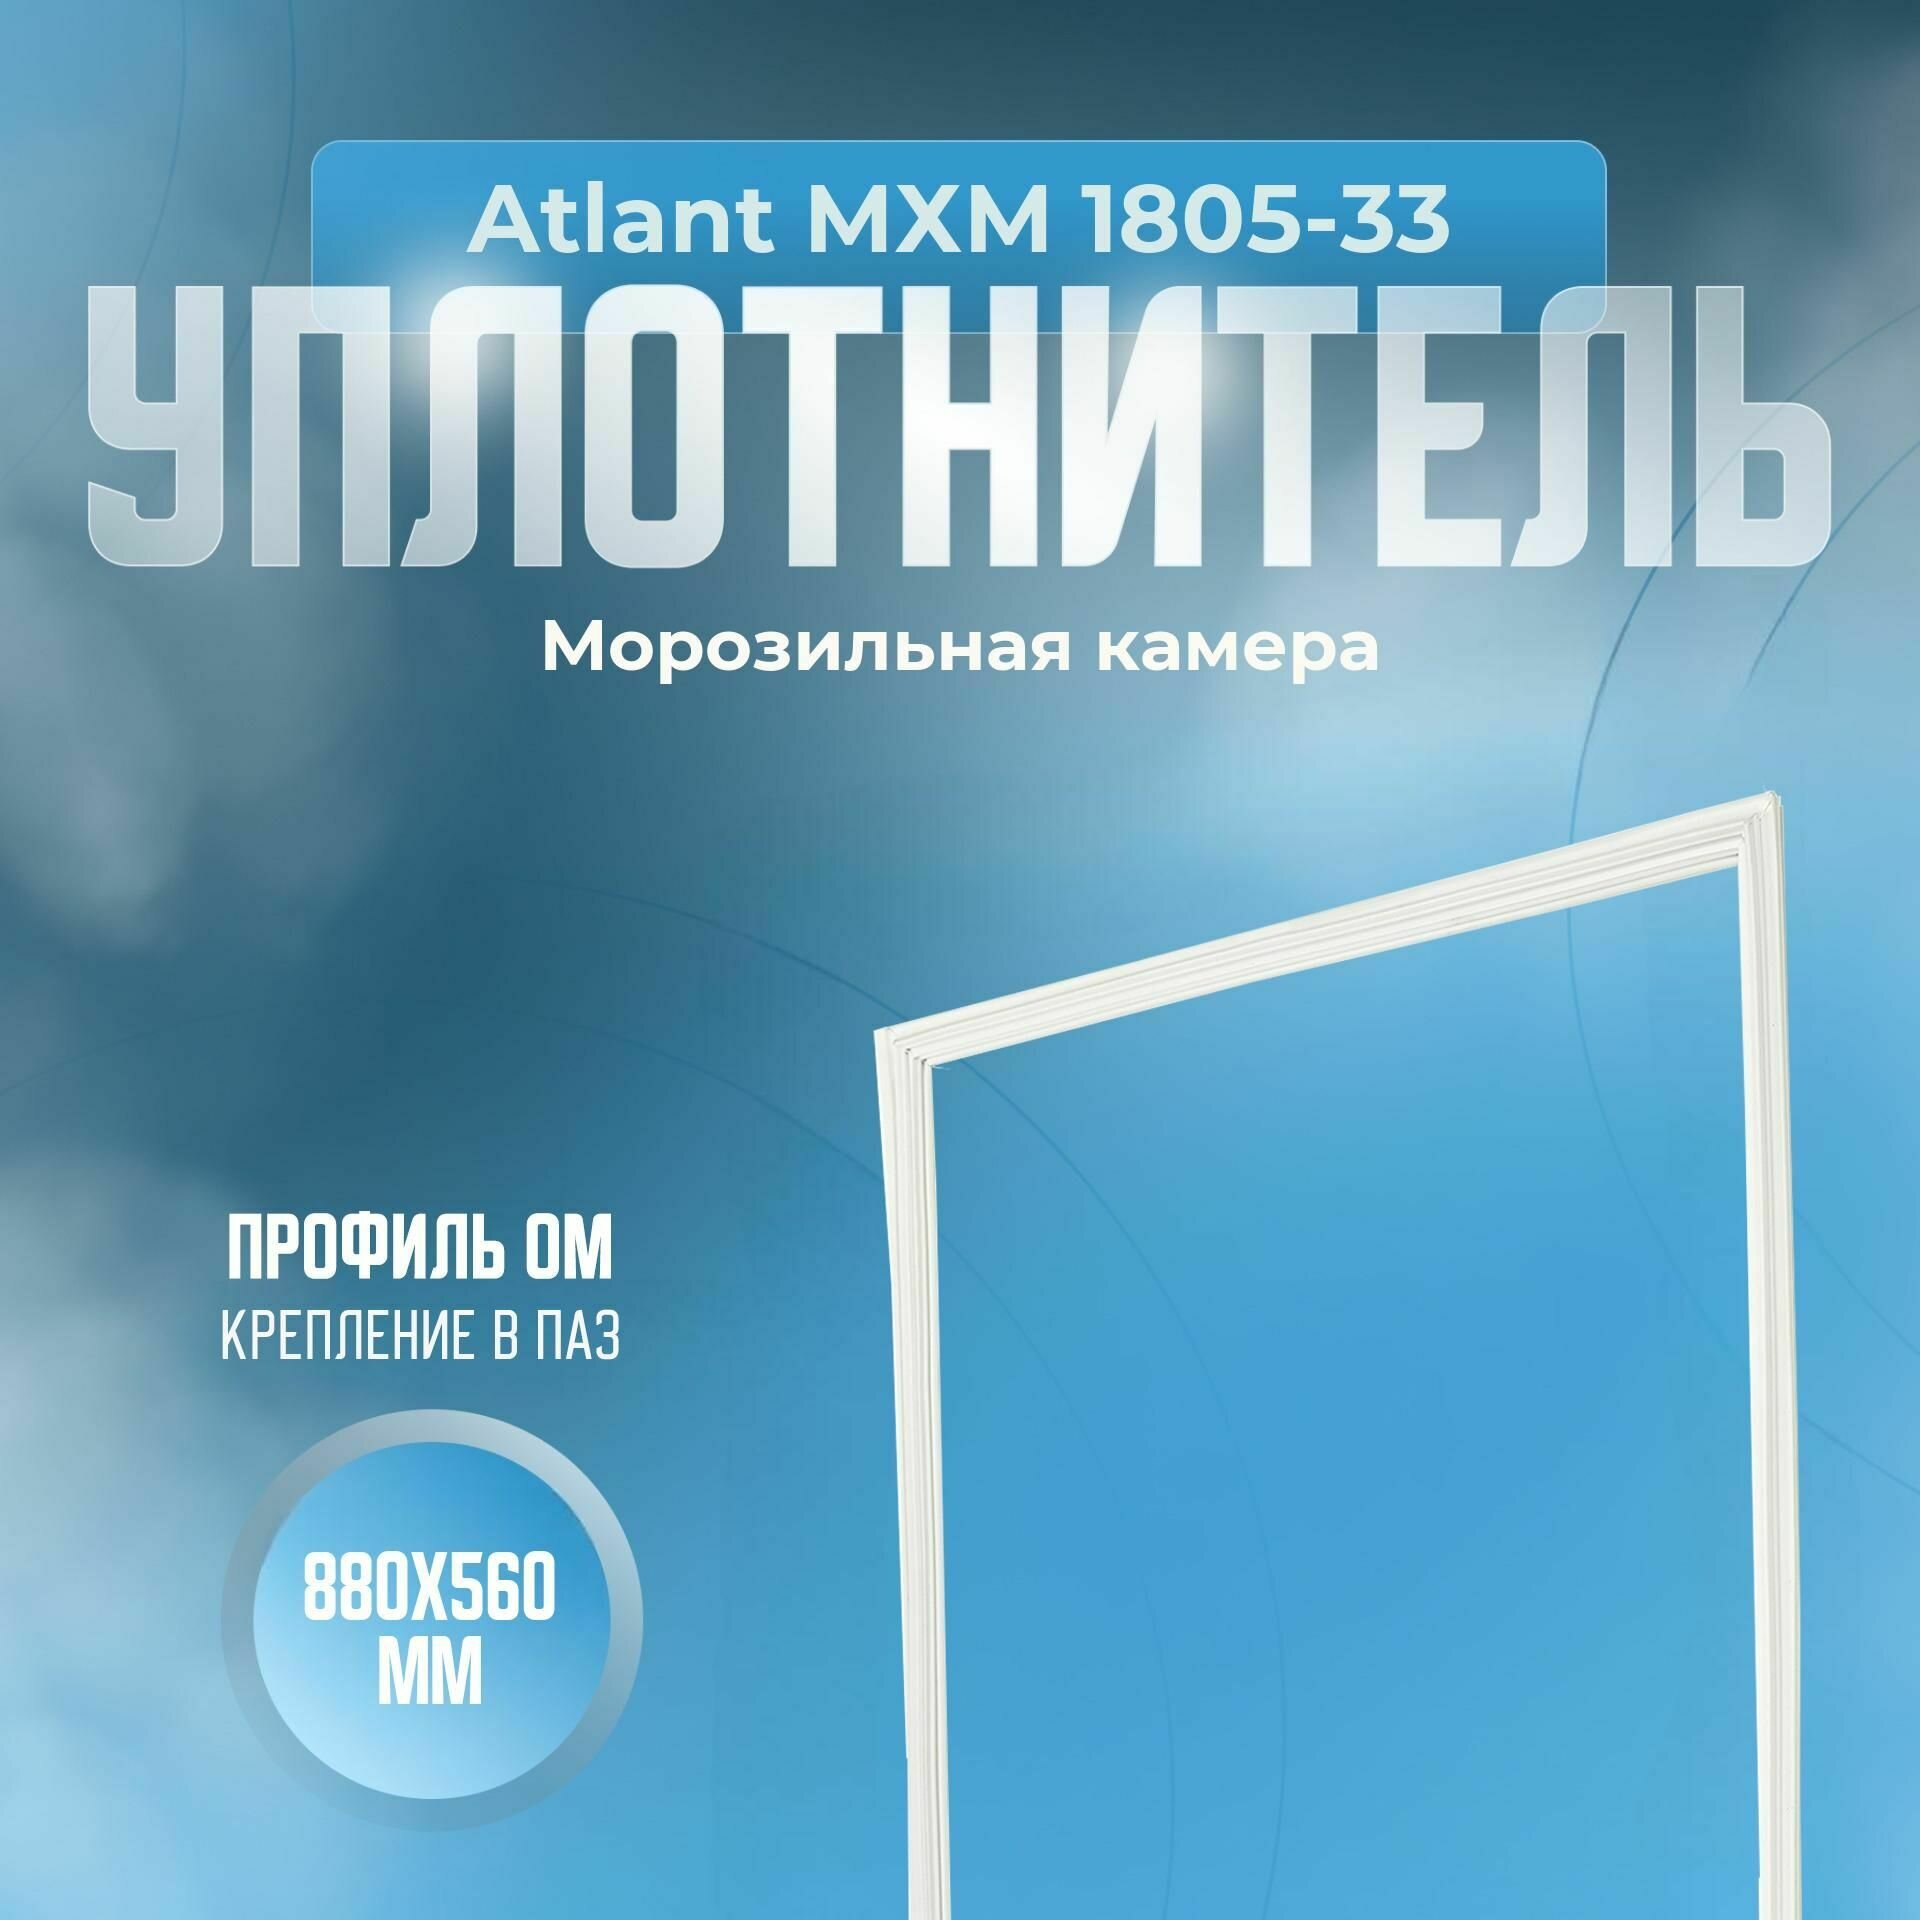 Уплотнитель Atlant МХМ 1805-33. м. к, Размер - 880х560 мм. ОМ